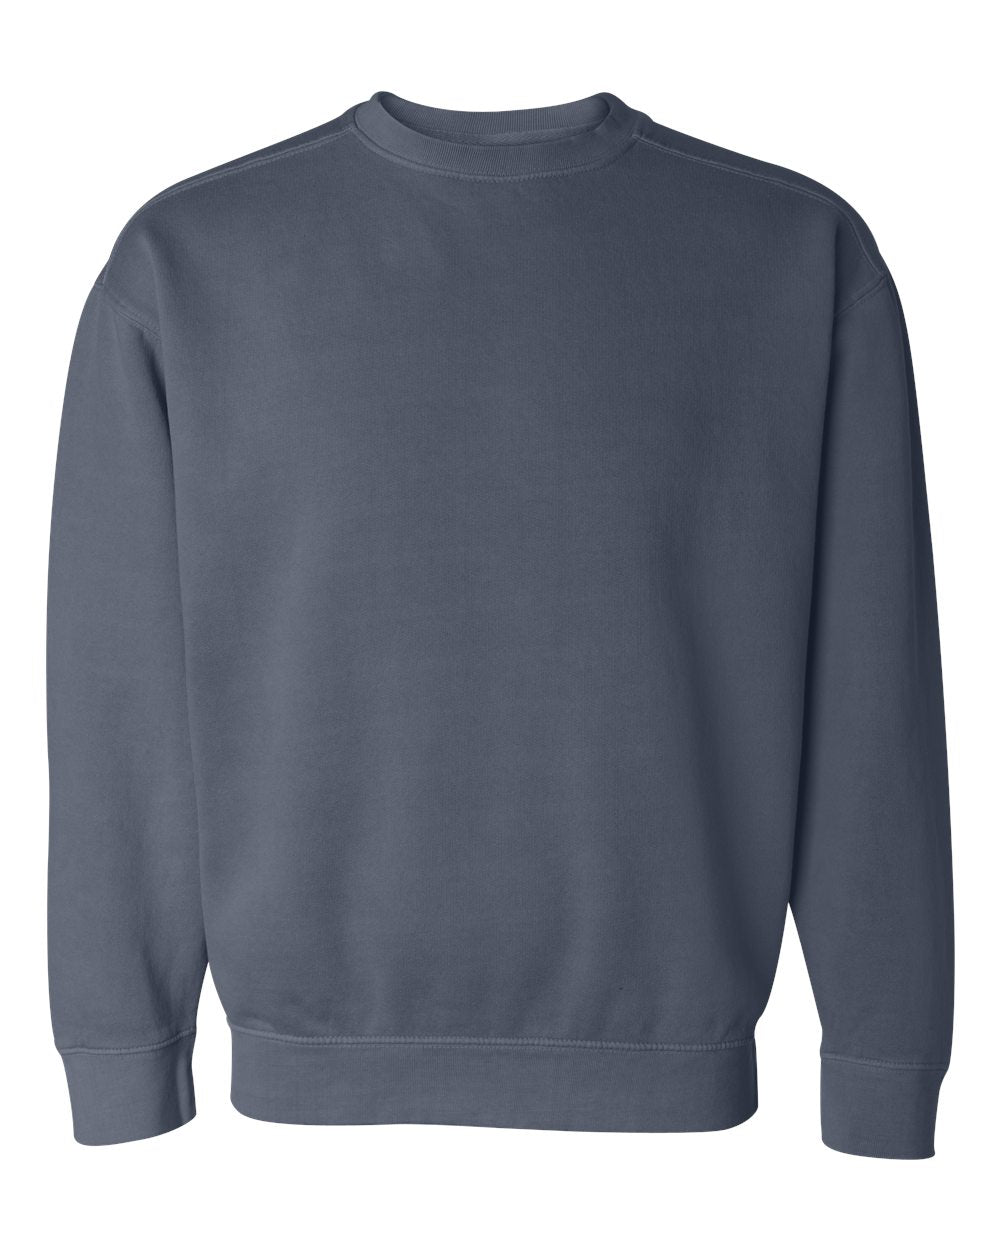 Sorority Pigment Dyed Comfort Colors Crewneck Sweatshirt – Something Greek